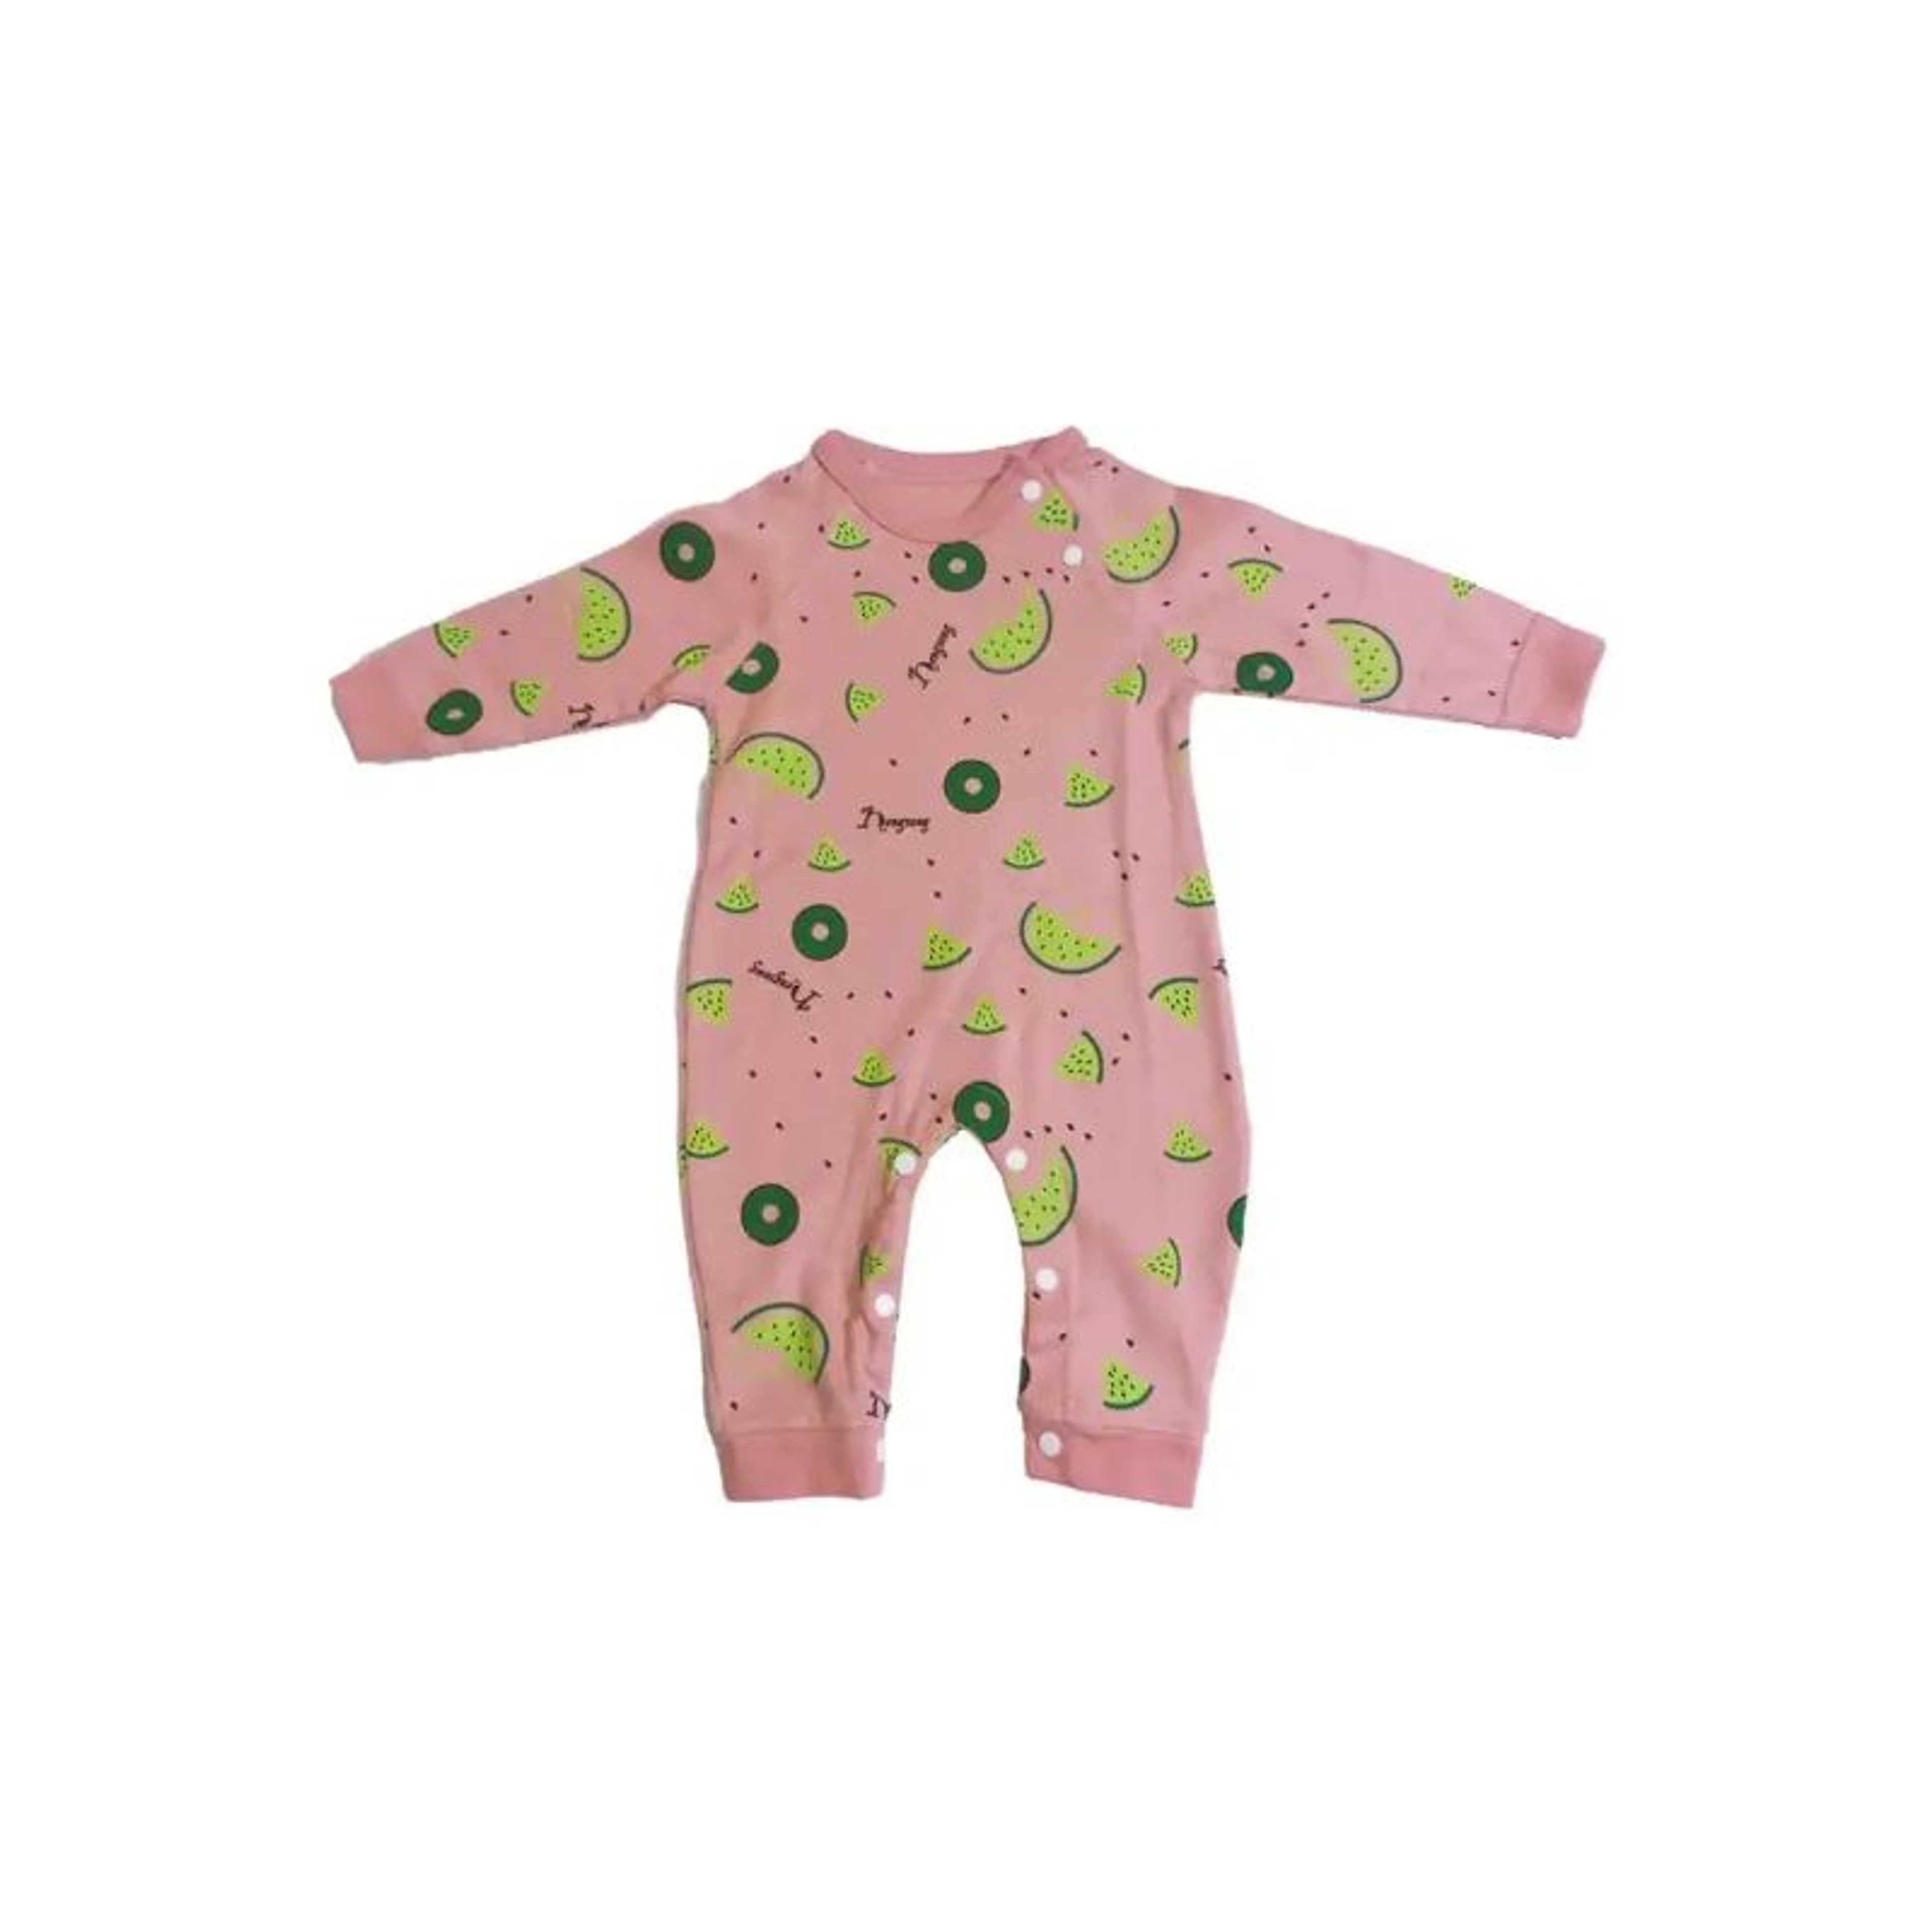 Fruity pink baby Bodysuit
